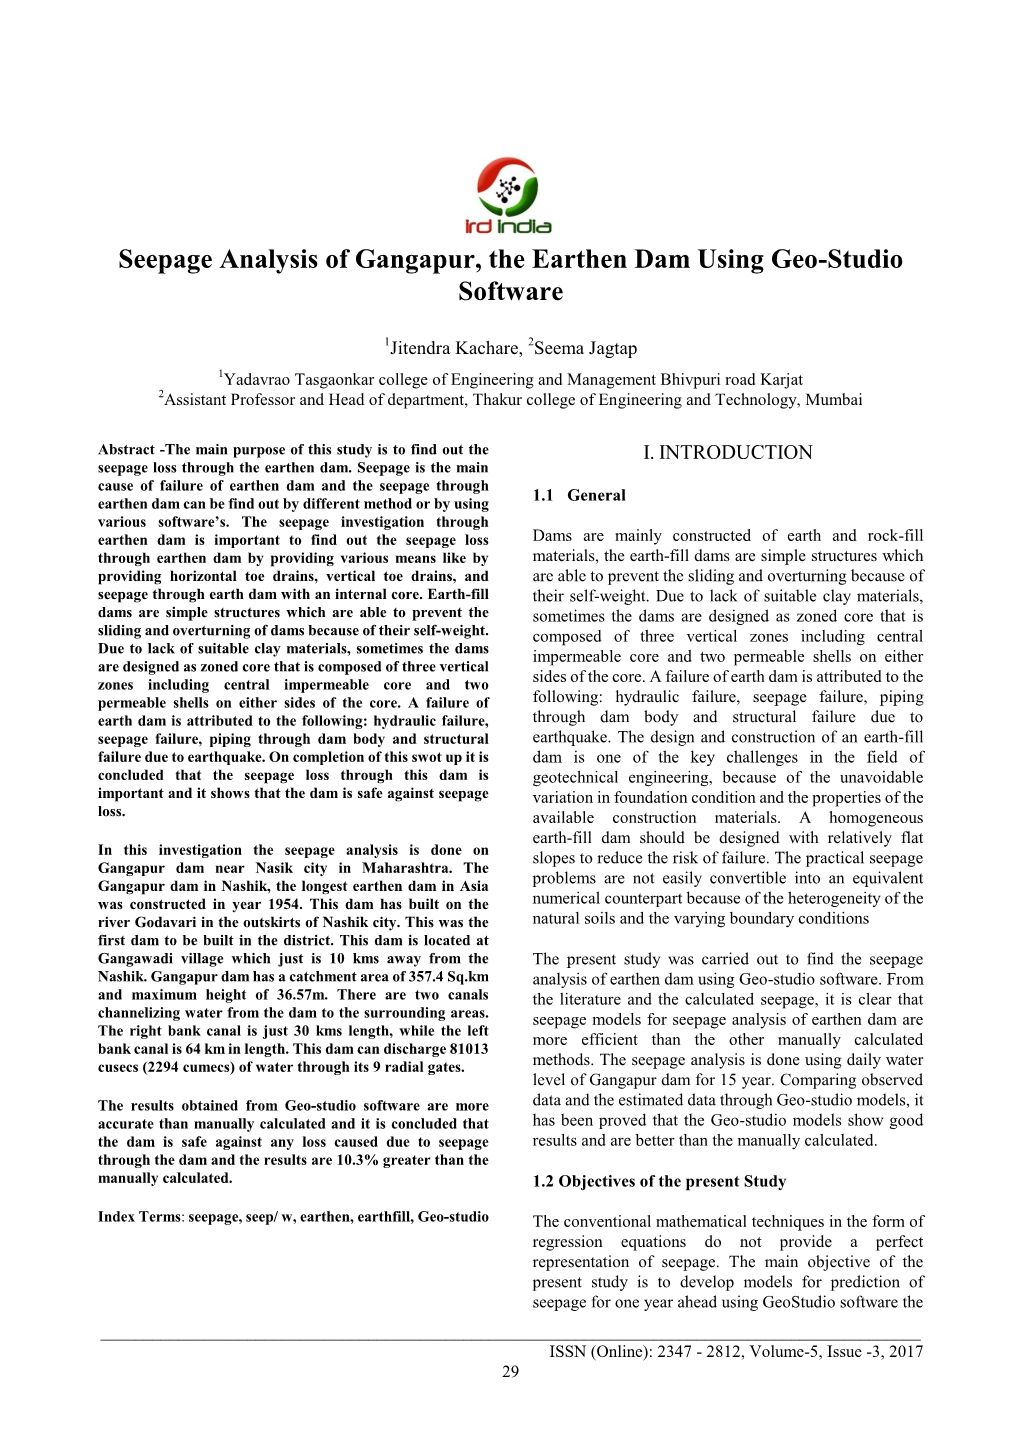 Seepage Analysis of Gangapur, the Earthen Dam Using Geo-Studio Software